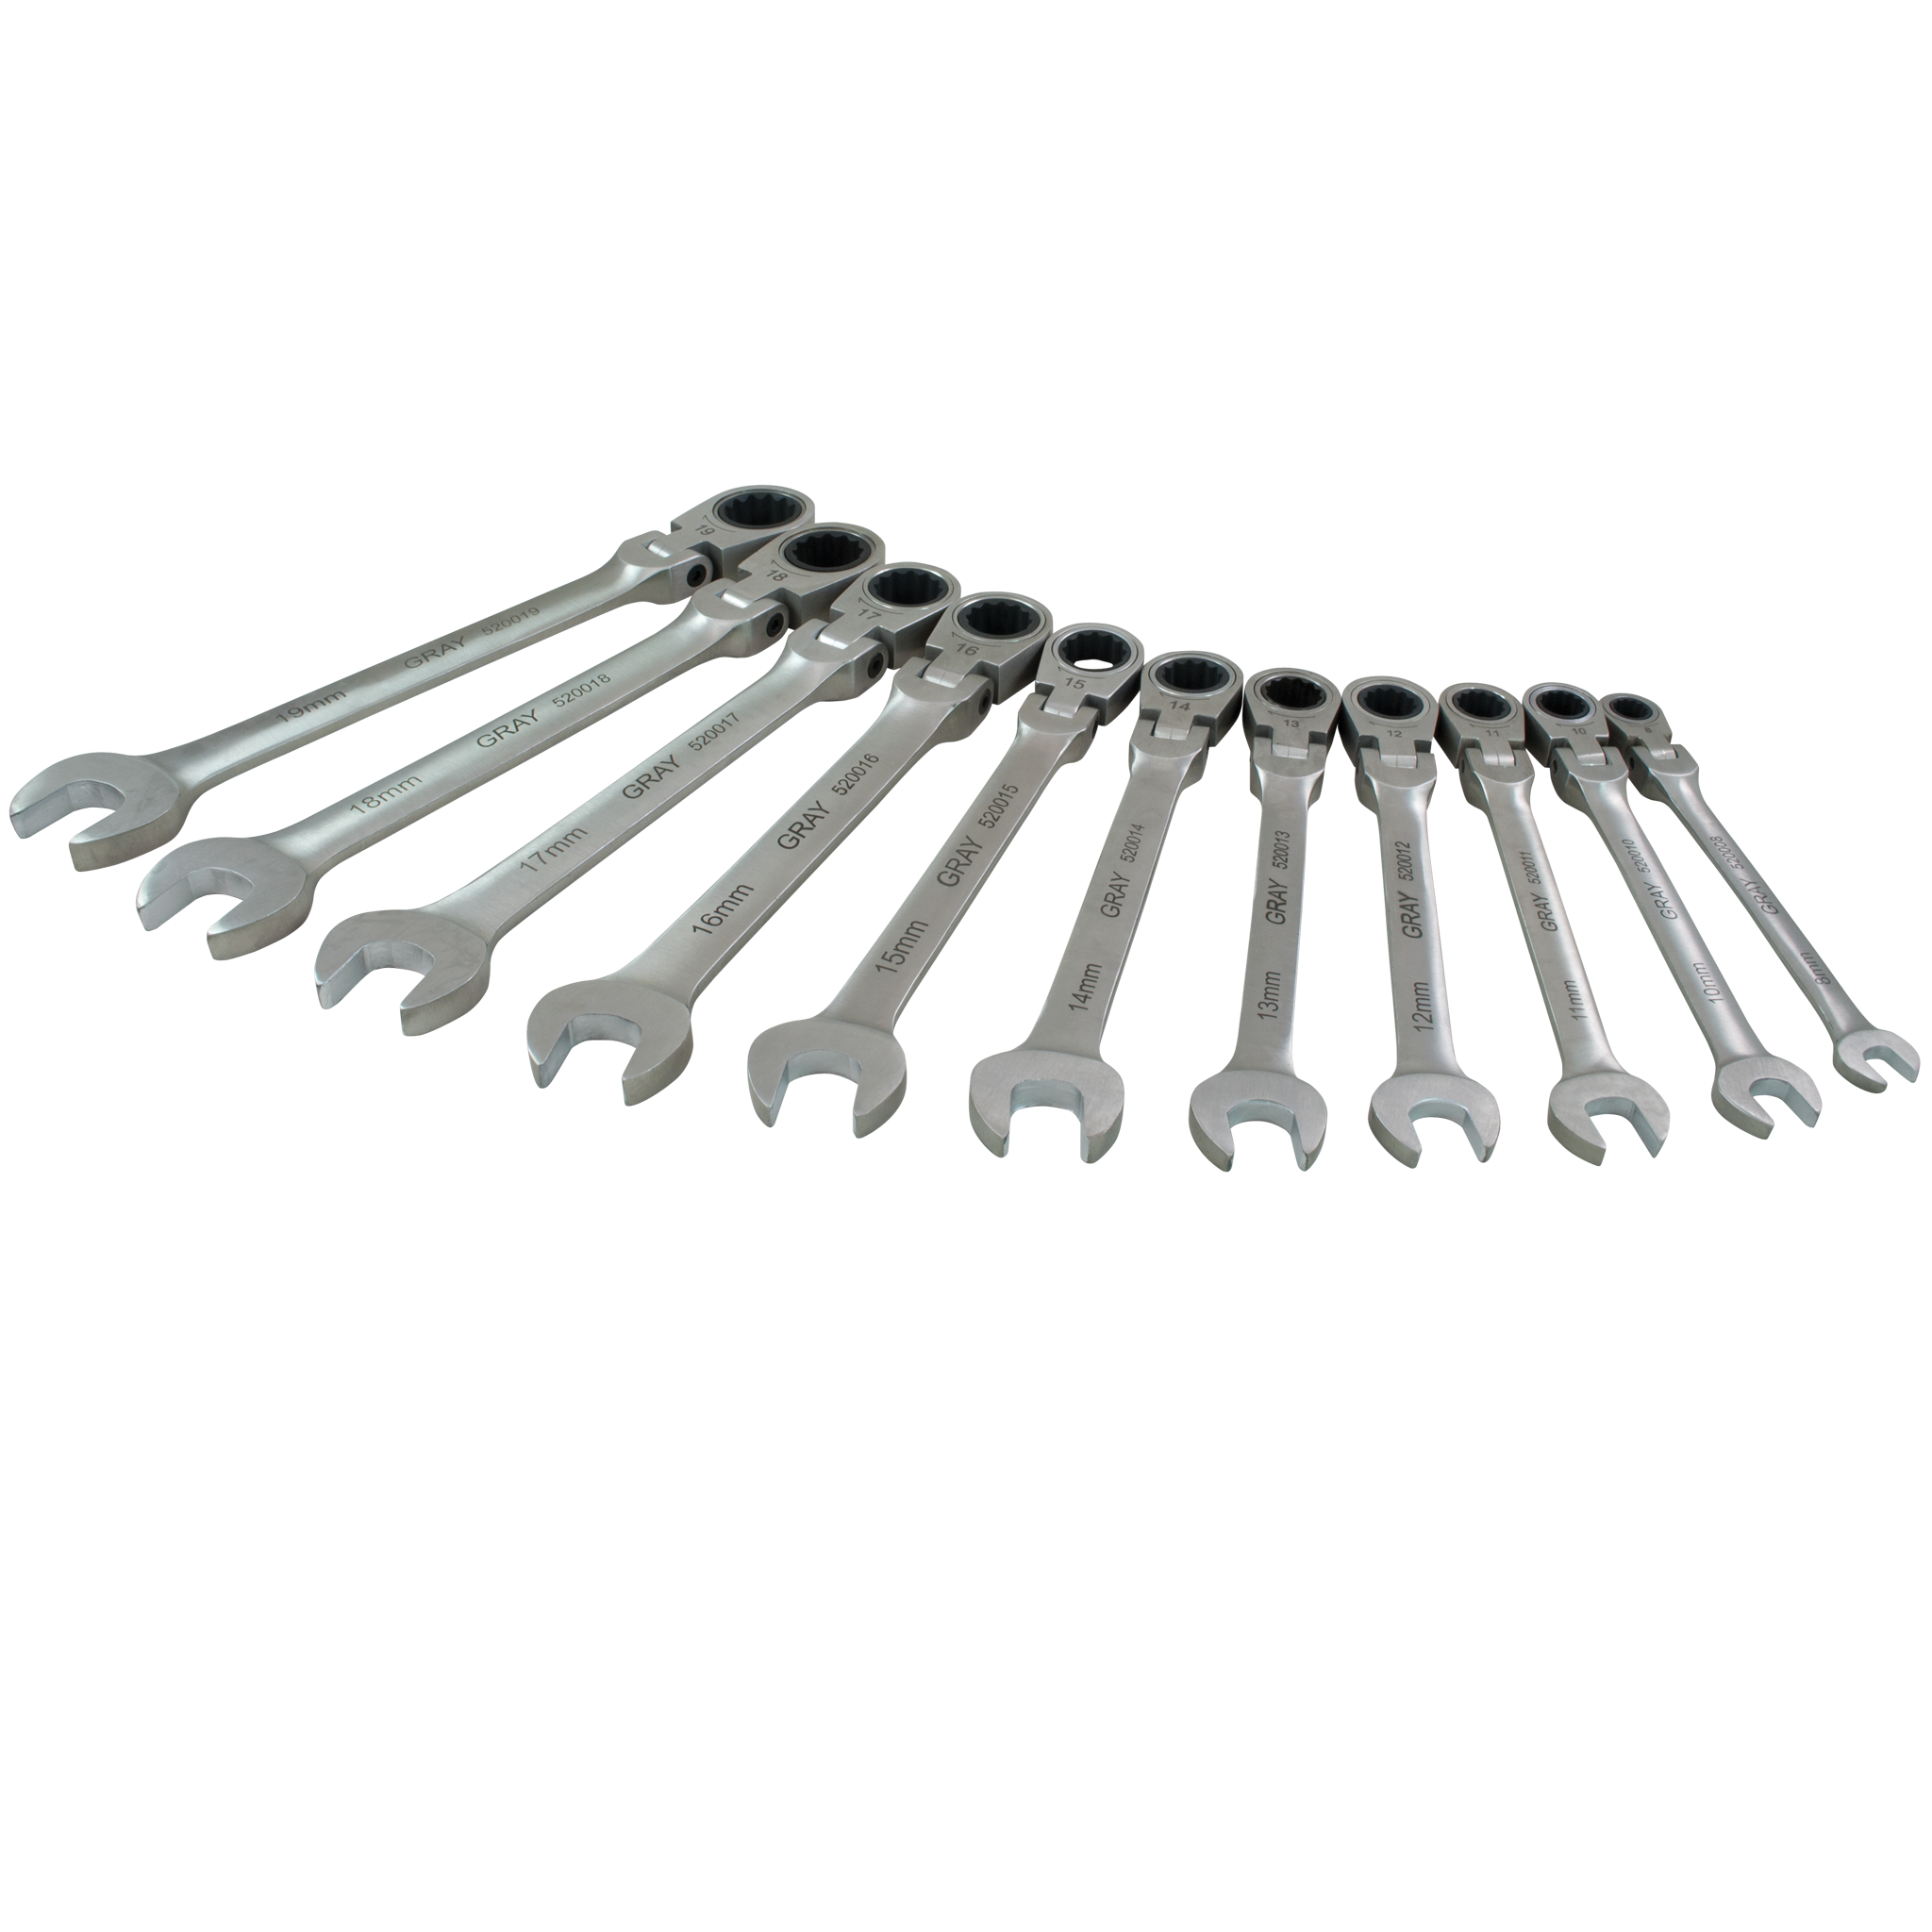 11 Piece Metric Combination Flex Head Multi-Gear Ratcheting Wrench Set